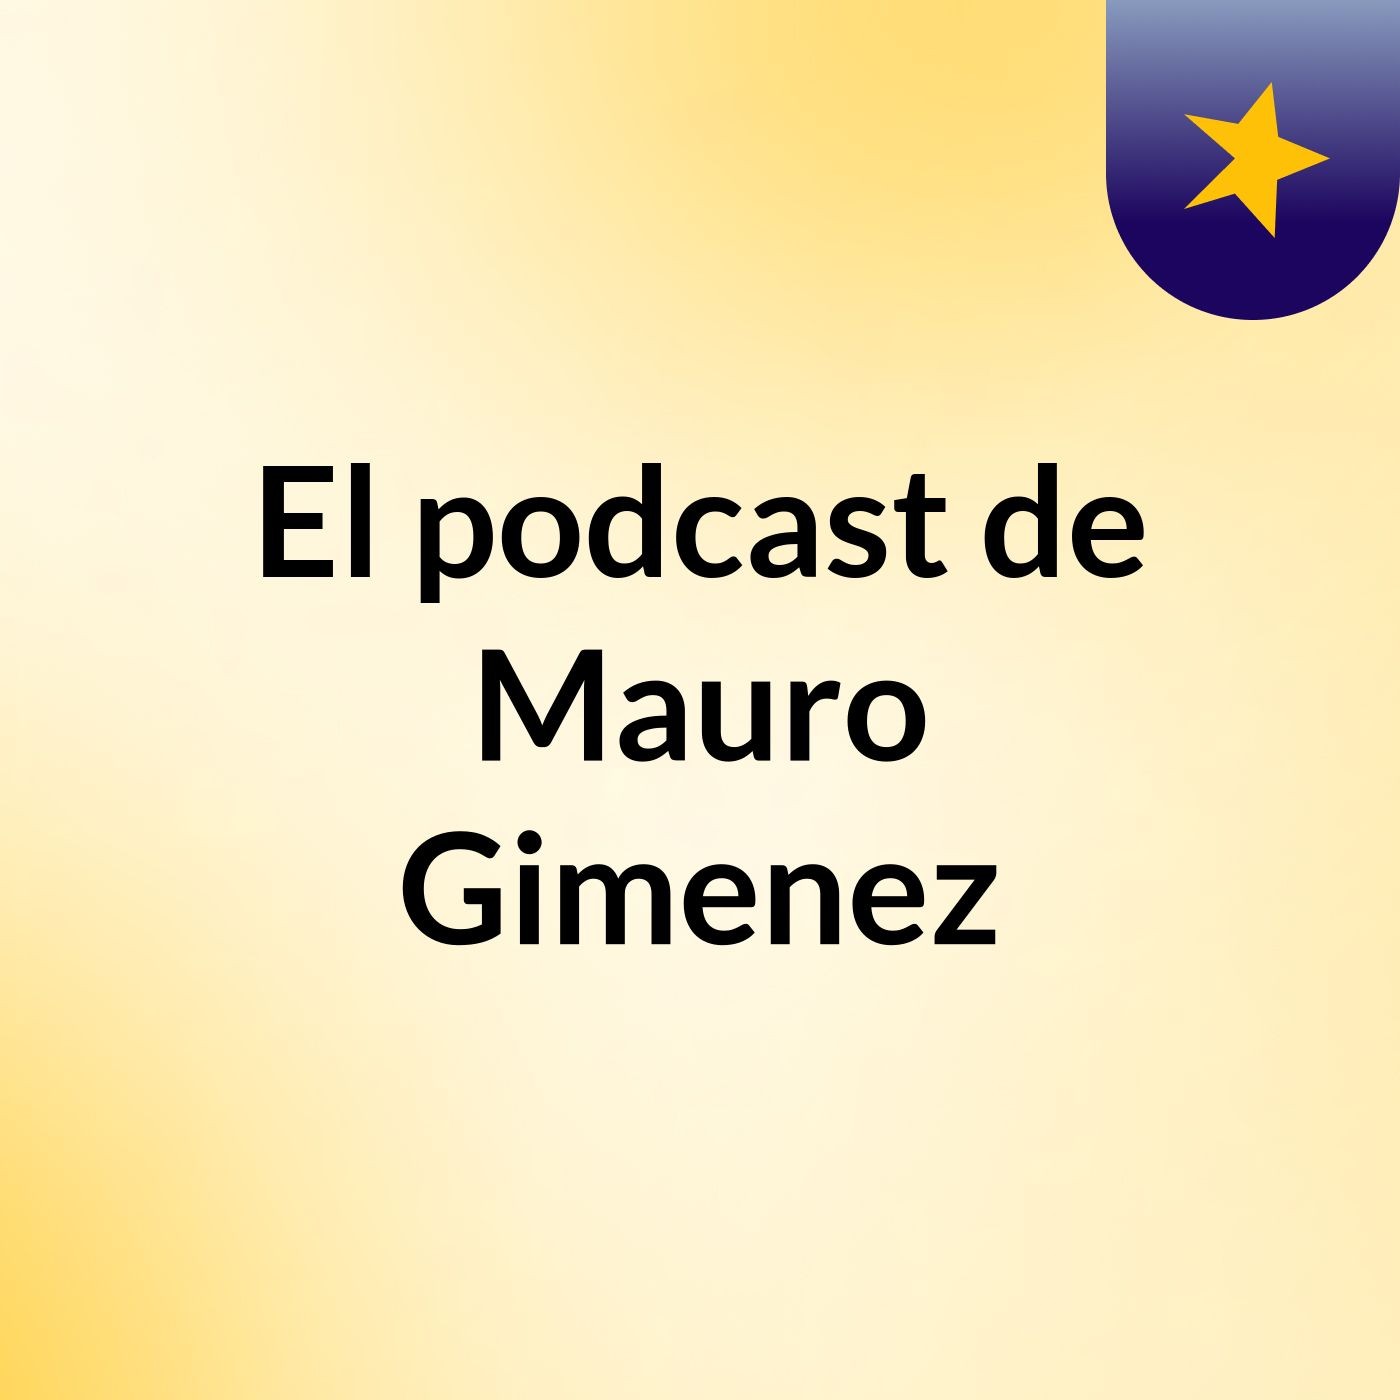 El podcast de Mauro Gimenez